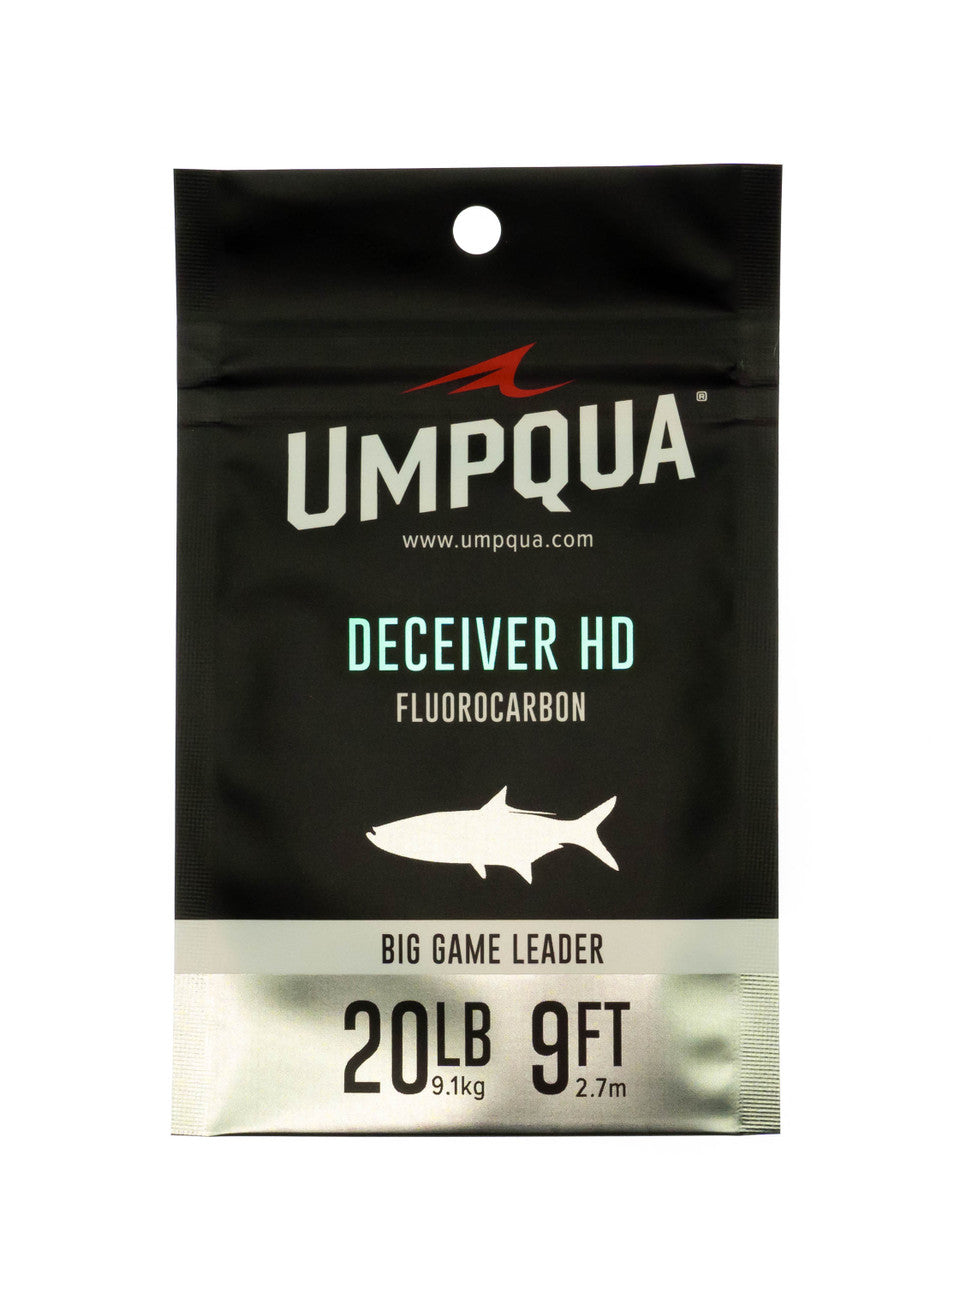 Umpqua Deceiver HD Fluorocarbon 9' Leader